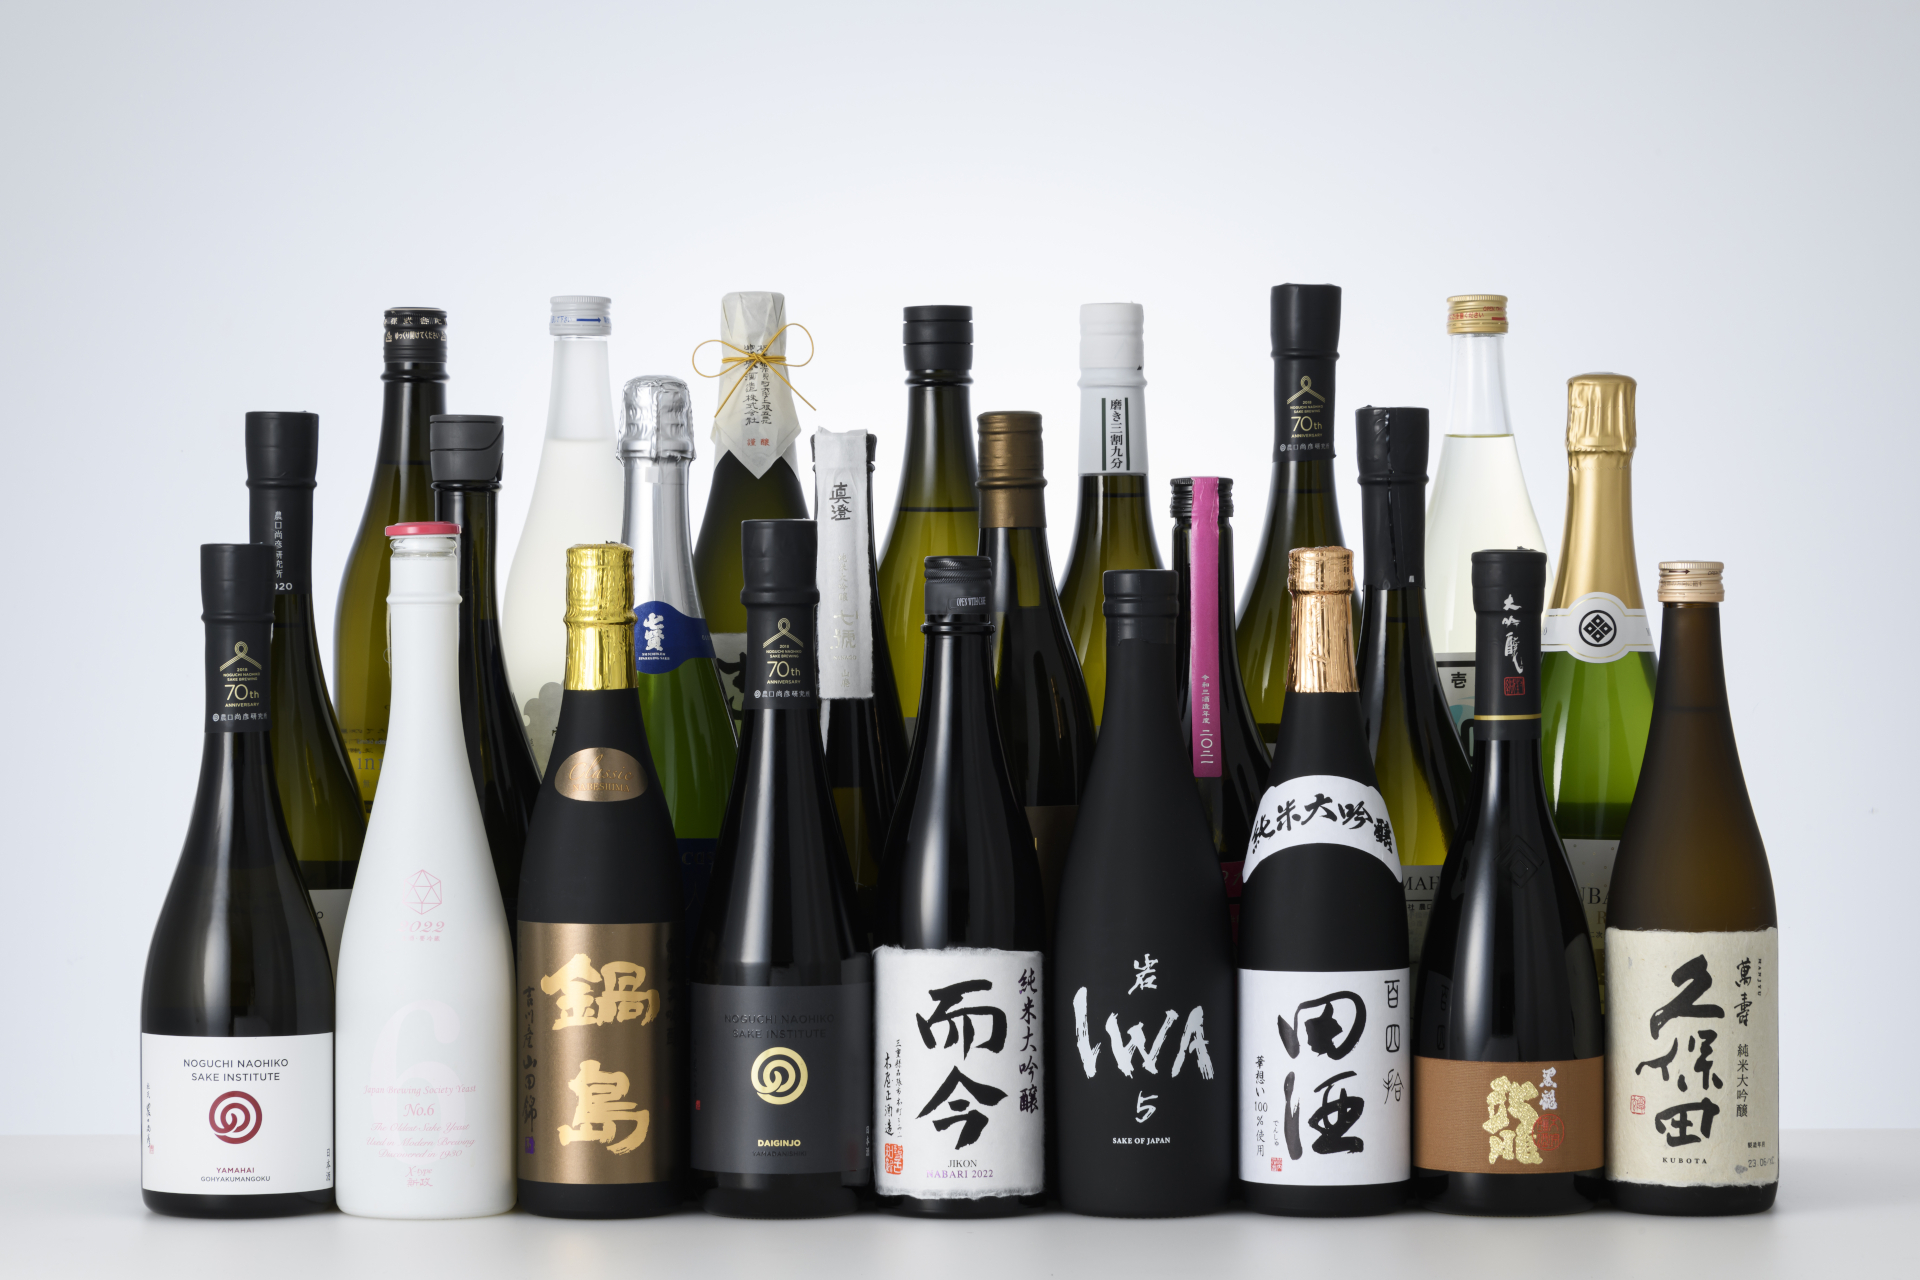 ANA、日本酒・焼酎ラインアップをリニューアル。白岩「IWA5 